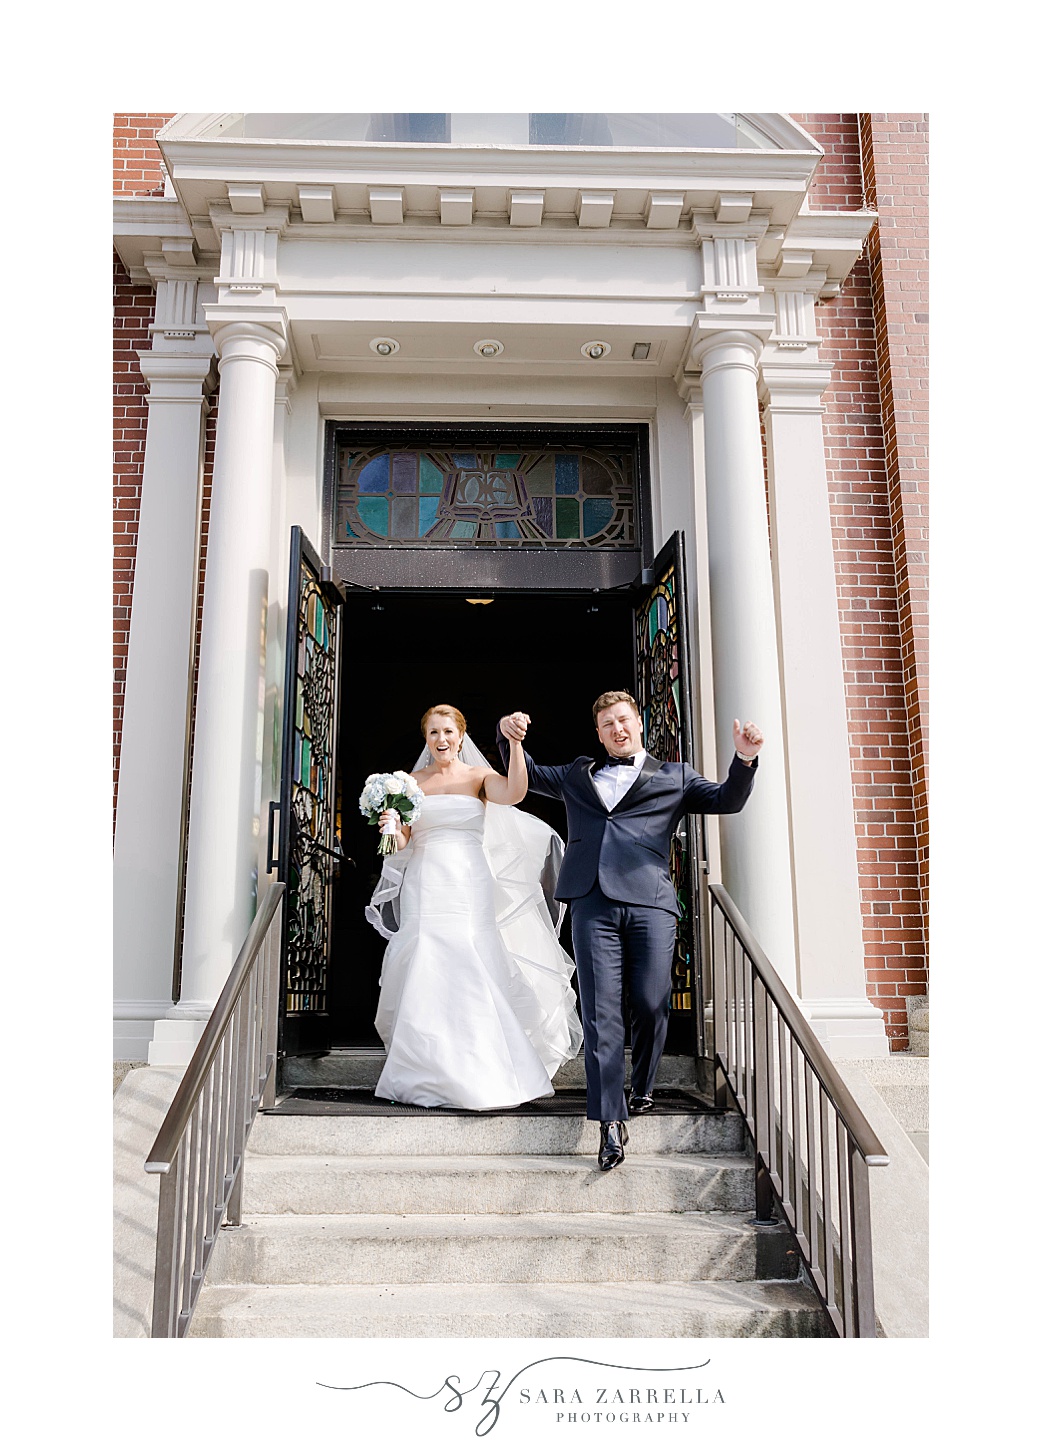 newlyweds cheer leaving church after traditional church wedding in Rhode Island